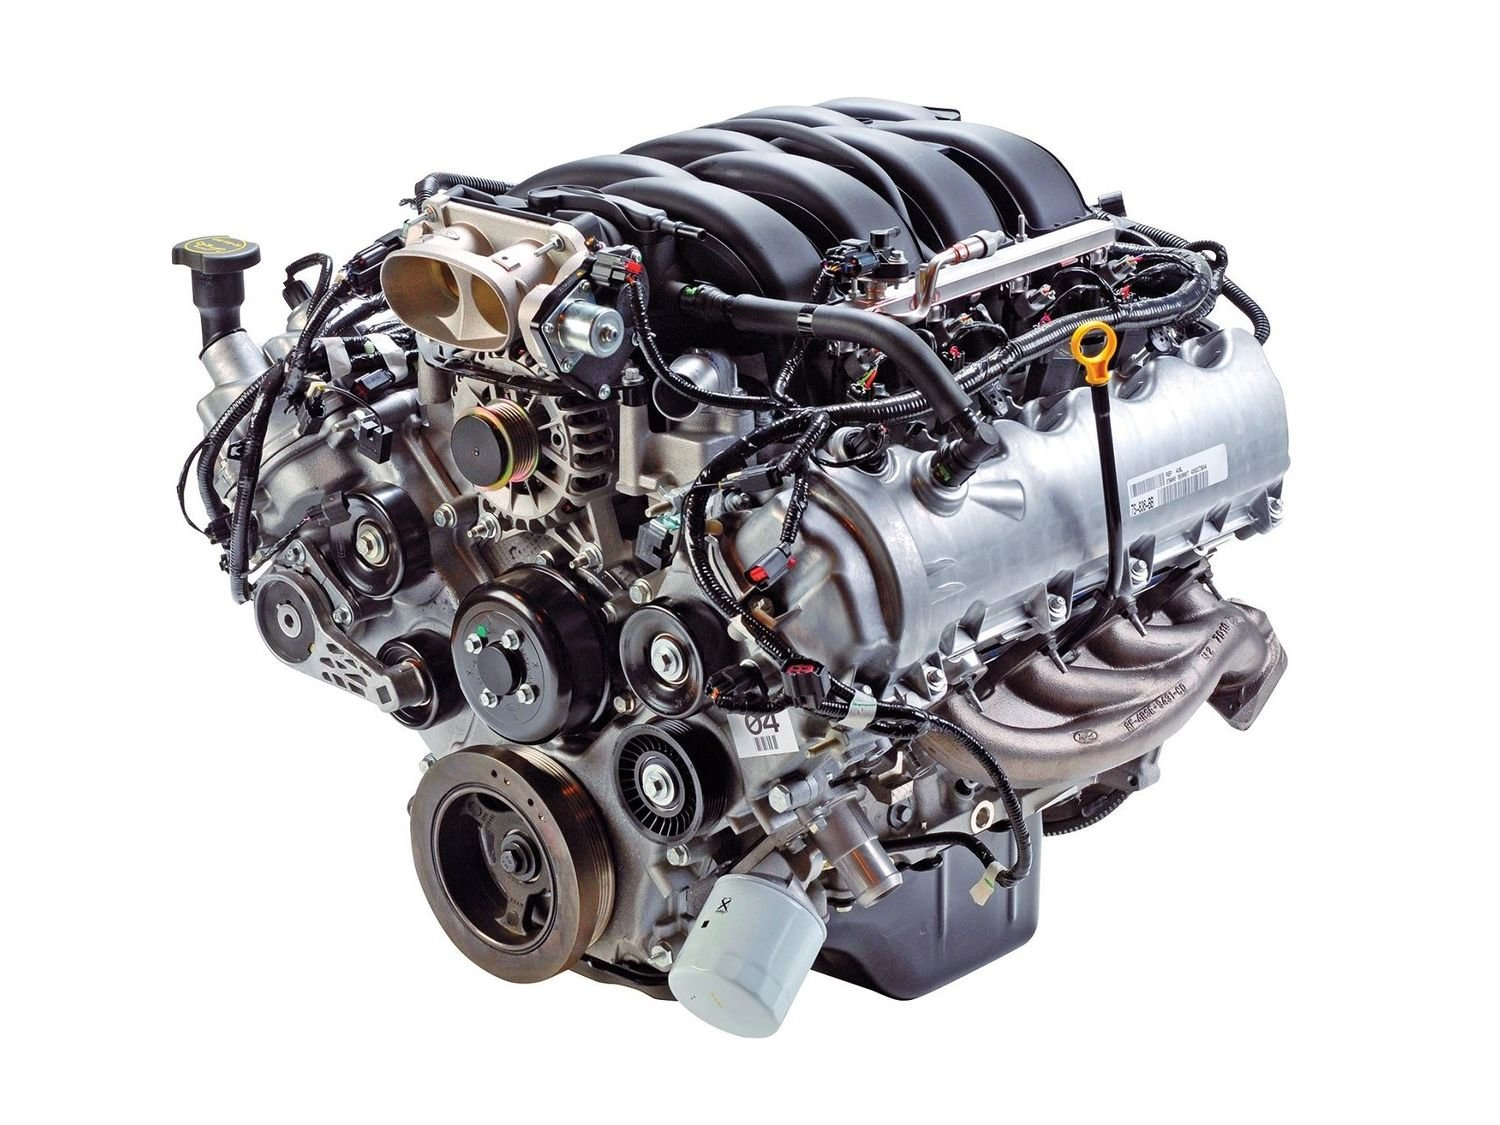 Двигатель двигатель 1 3 литра. 4.6 L Modular SOHC v8. Двигатель Форд 4.6 v8. Двигатель Форд эксплорер 4.6 v8. Ford Triton 5.4l v8.